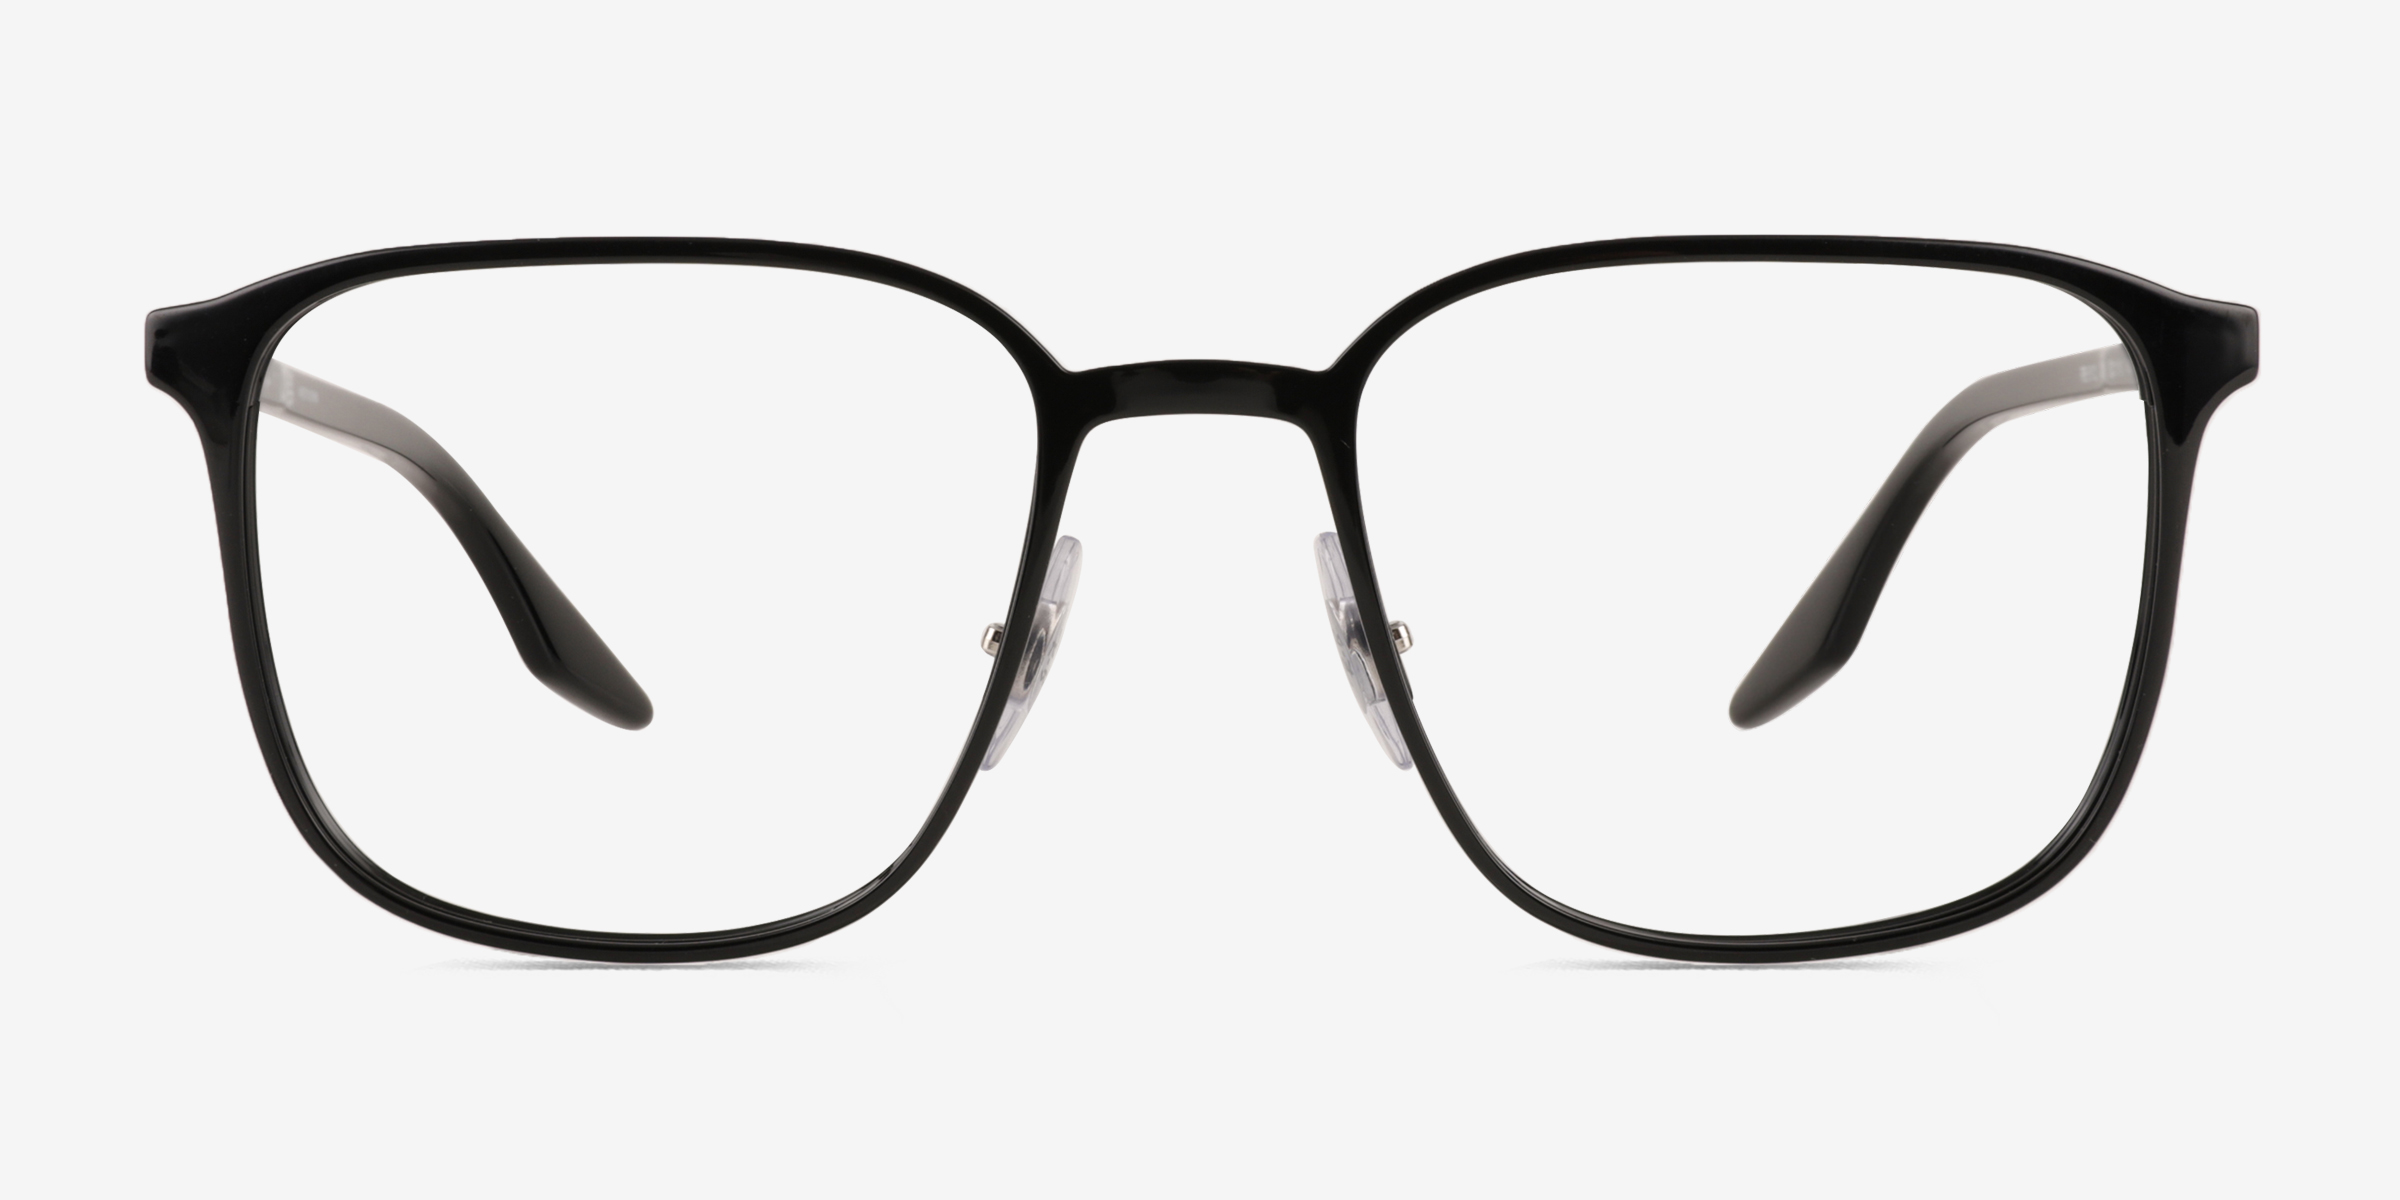 Ray-Ban RB6512 Black Metal Eyeglass Frames